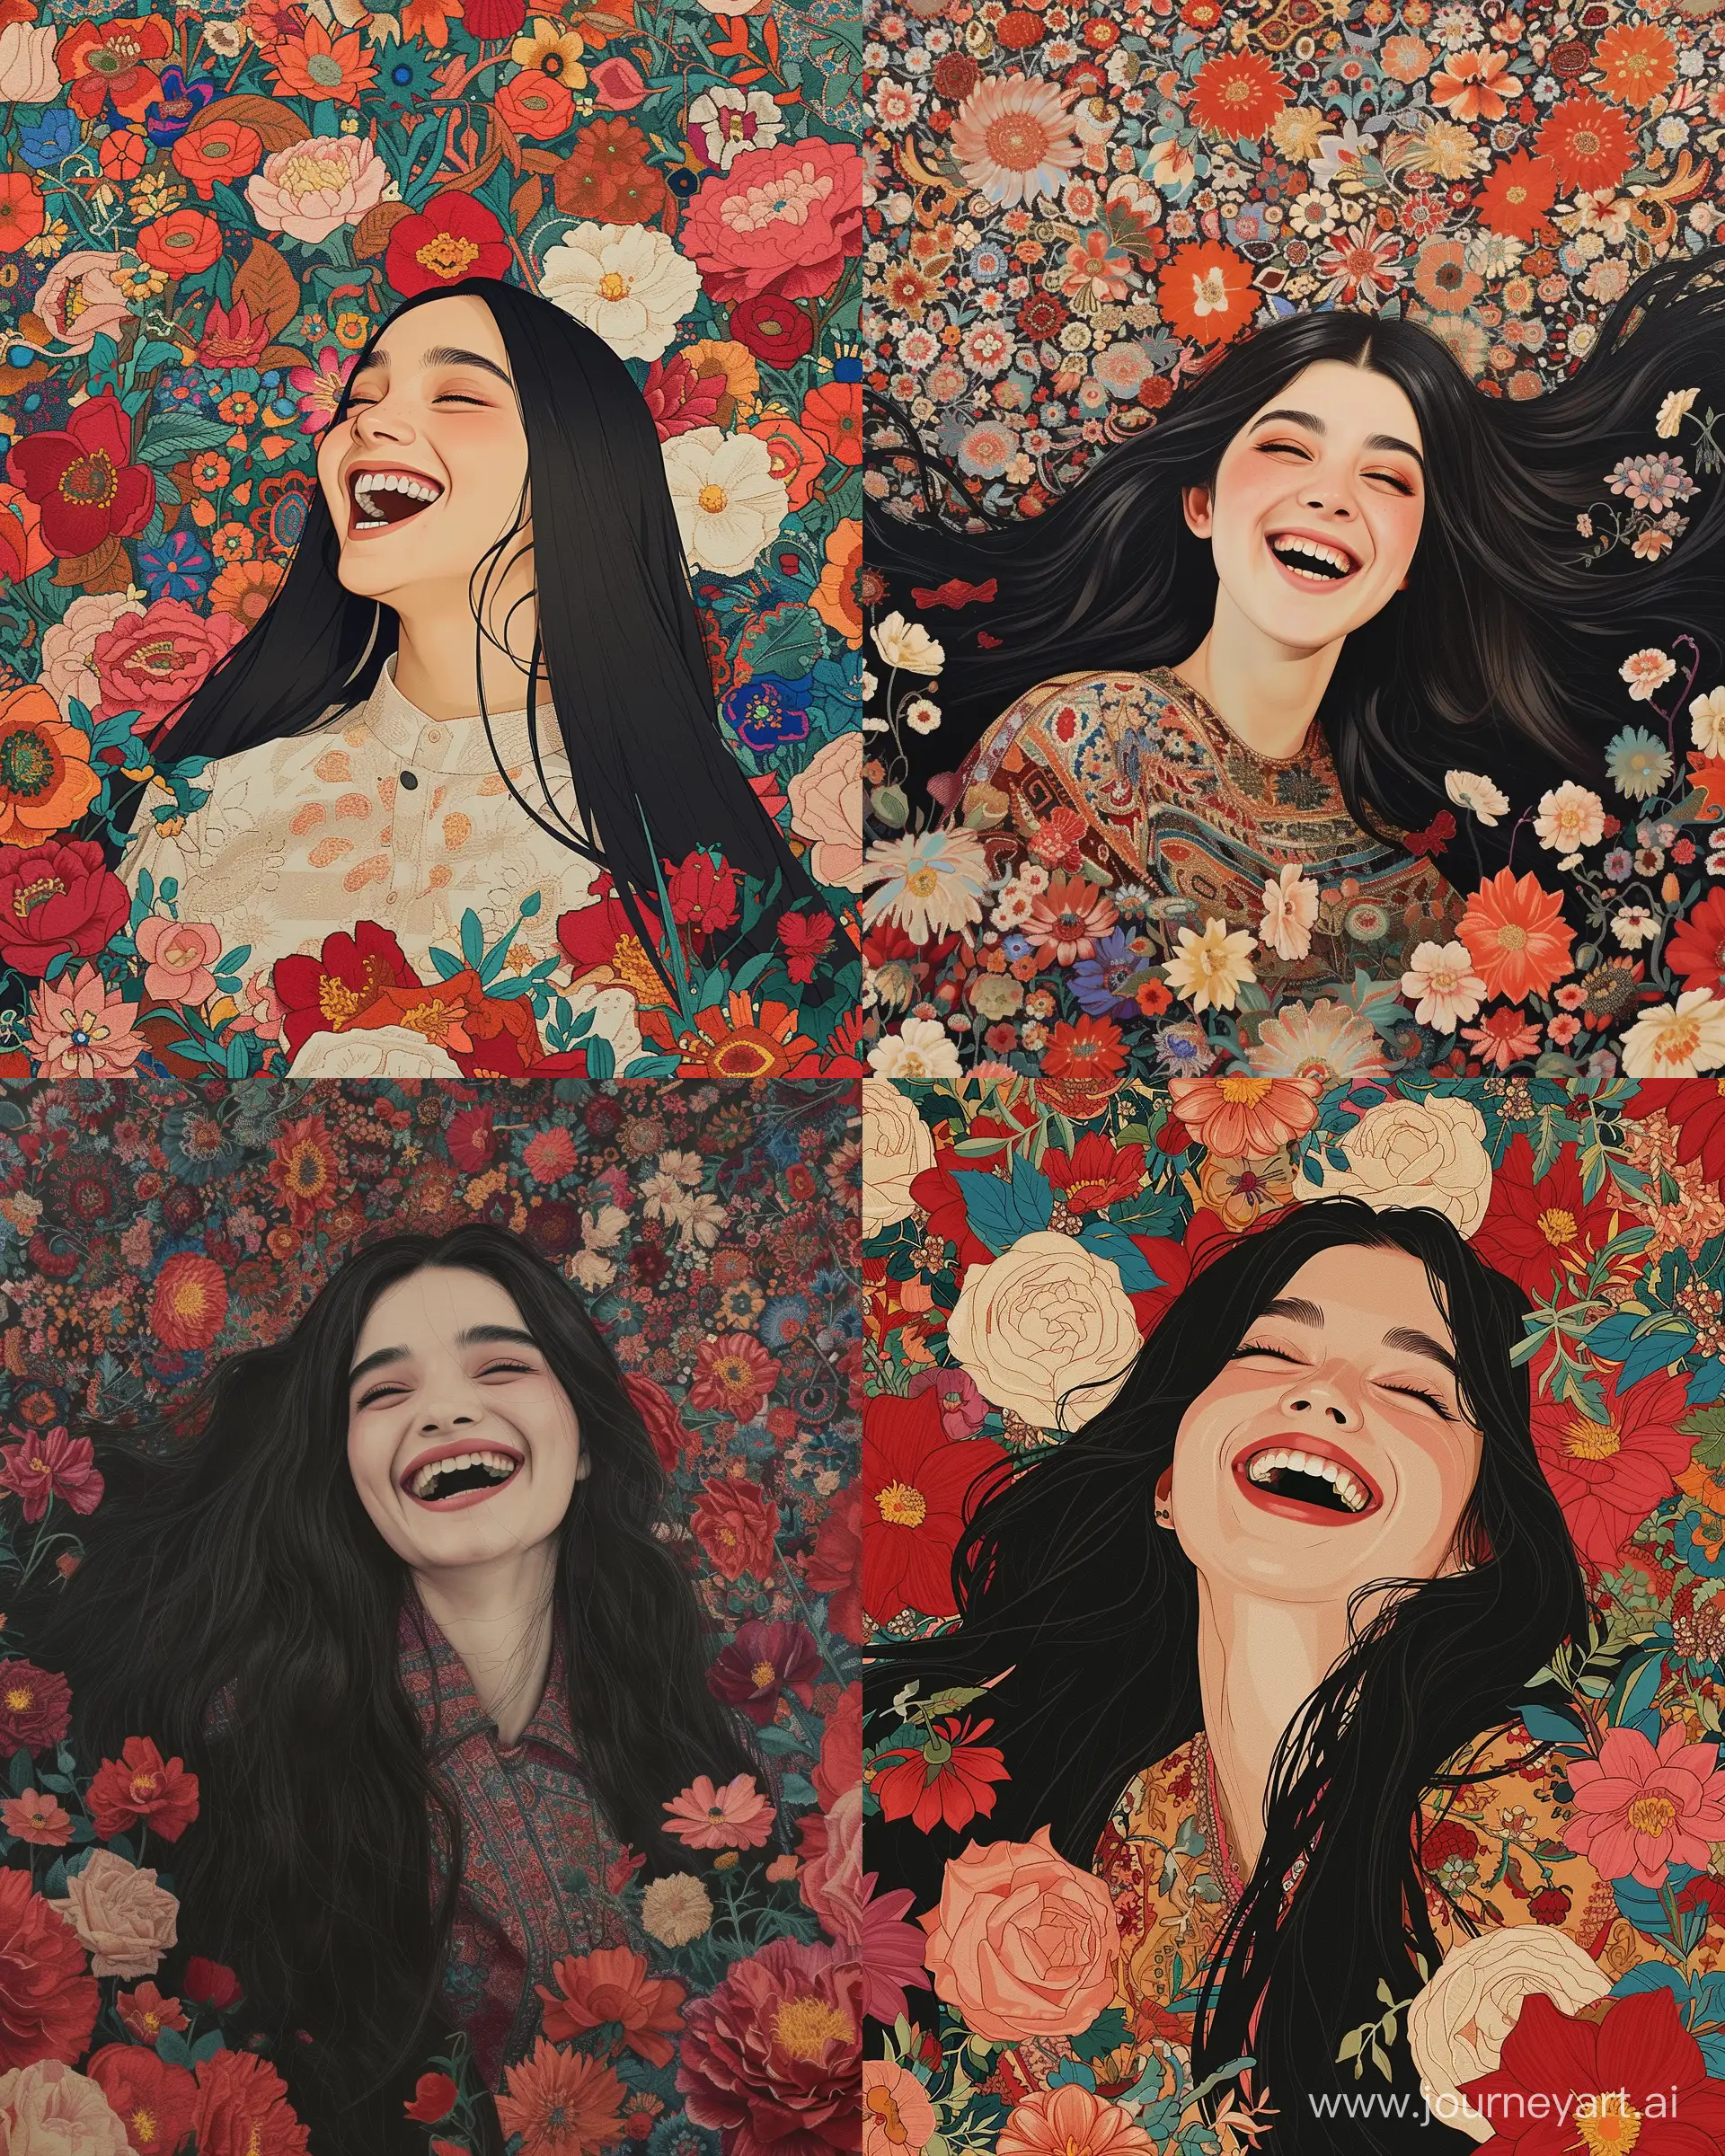 Joyful-30YearOld-Persian-Woman-Surrounded-by-Luxurious-Floral-Splendor